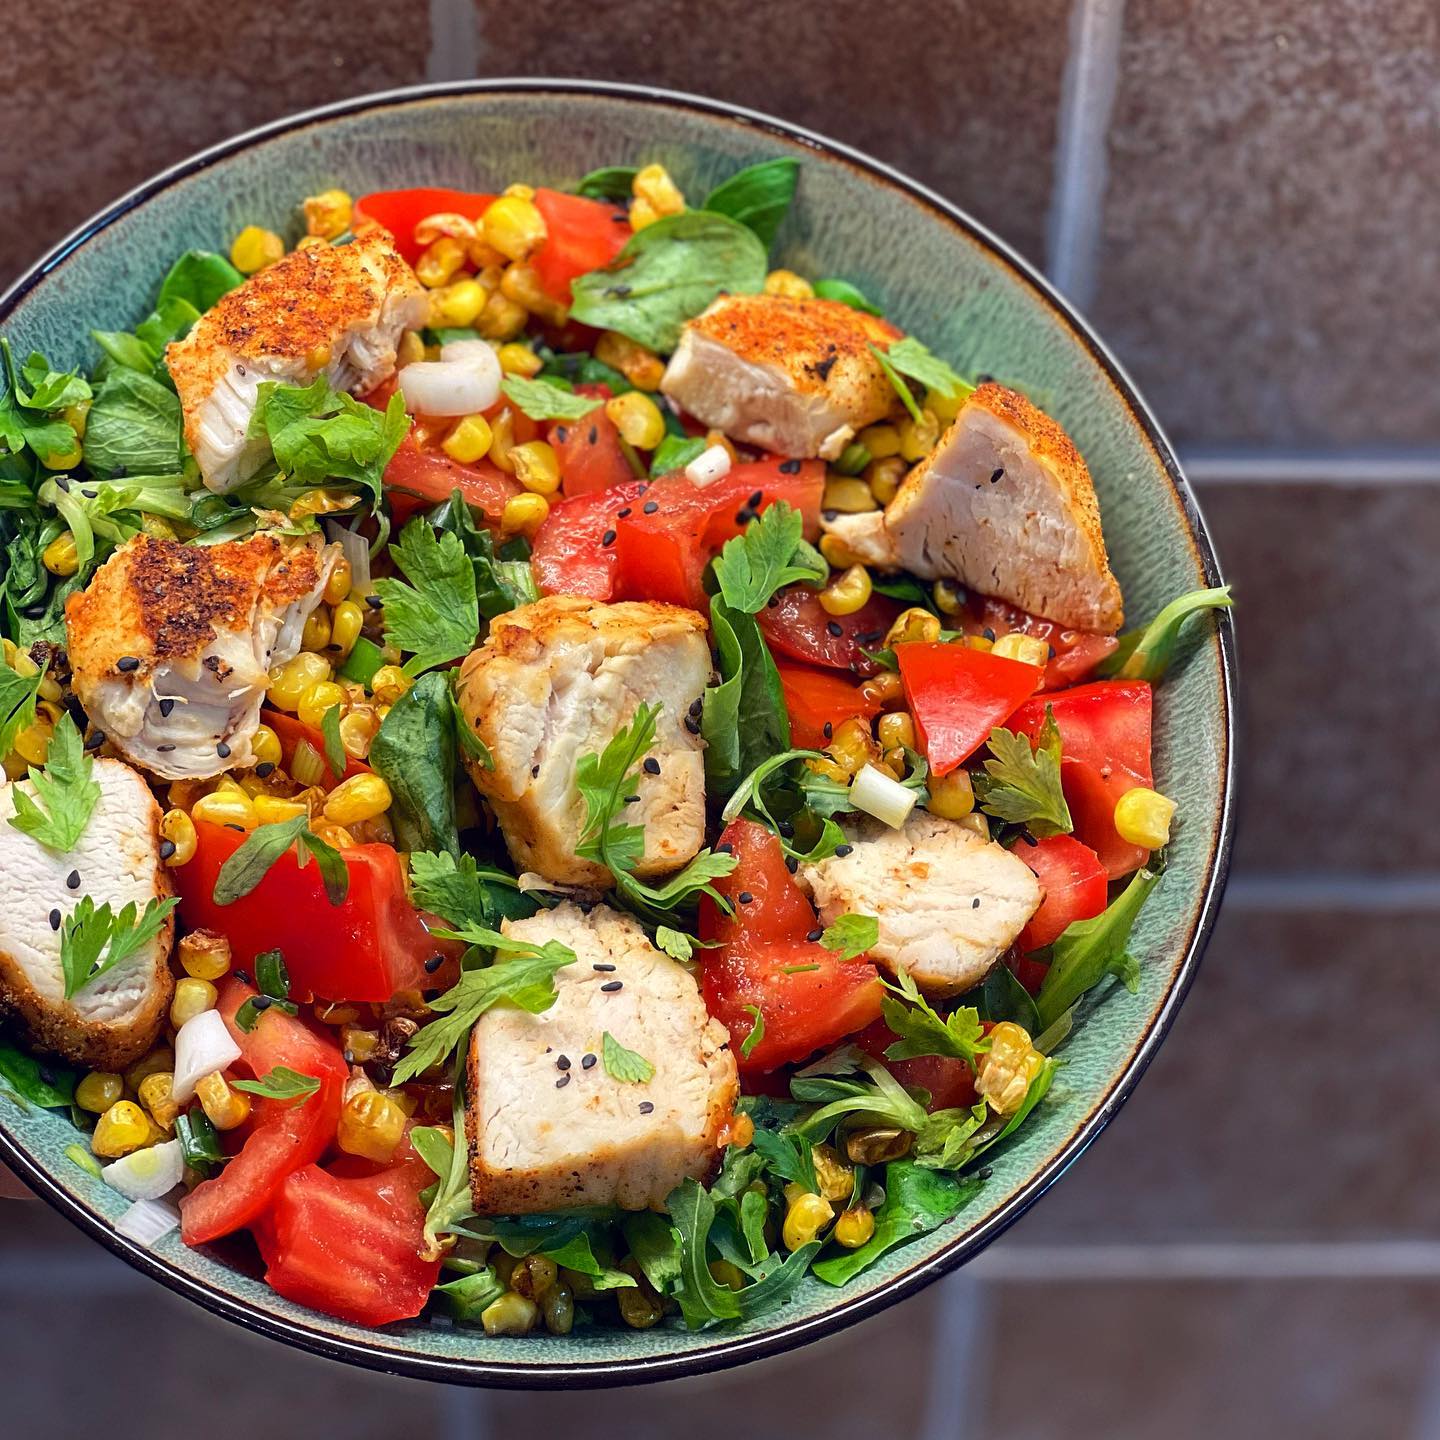 Tijana Mladenovic recipe for meal salad after workout